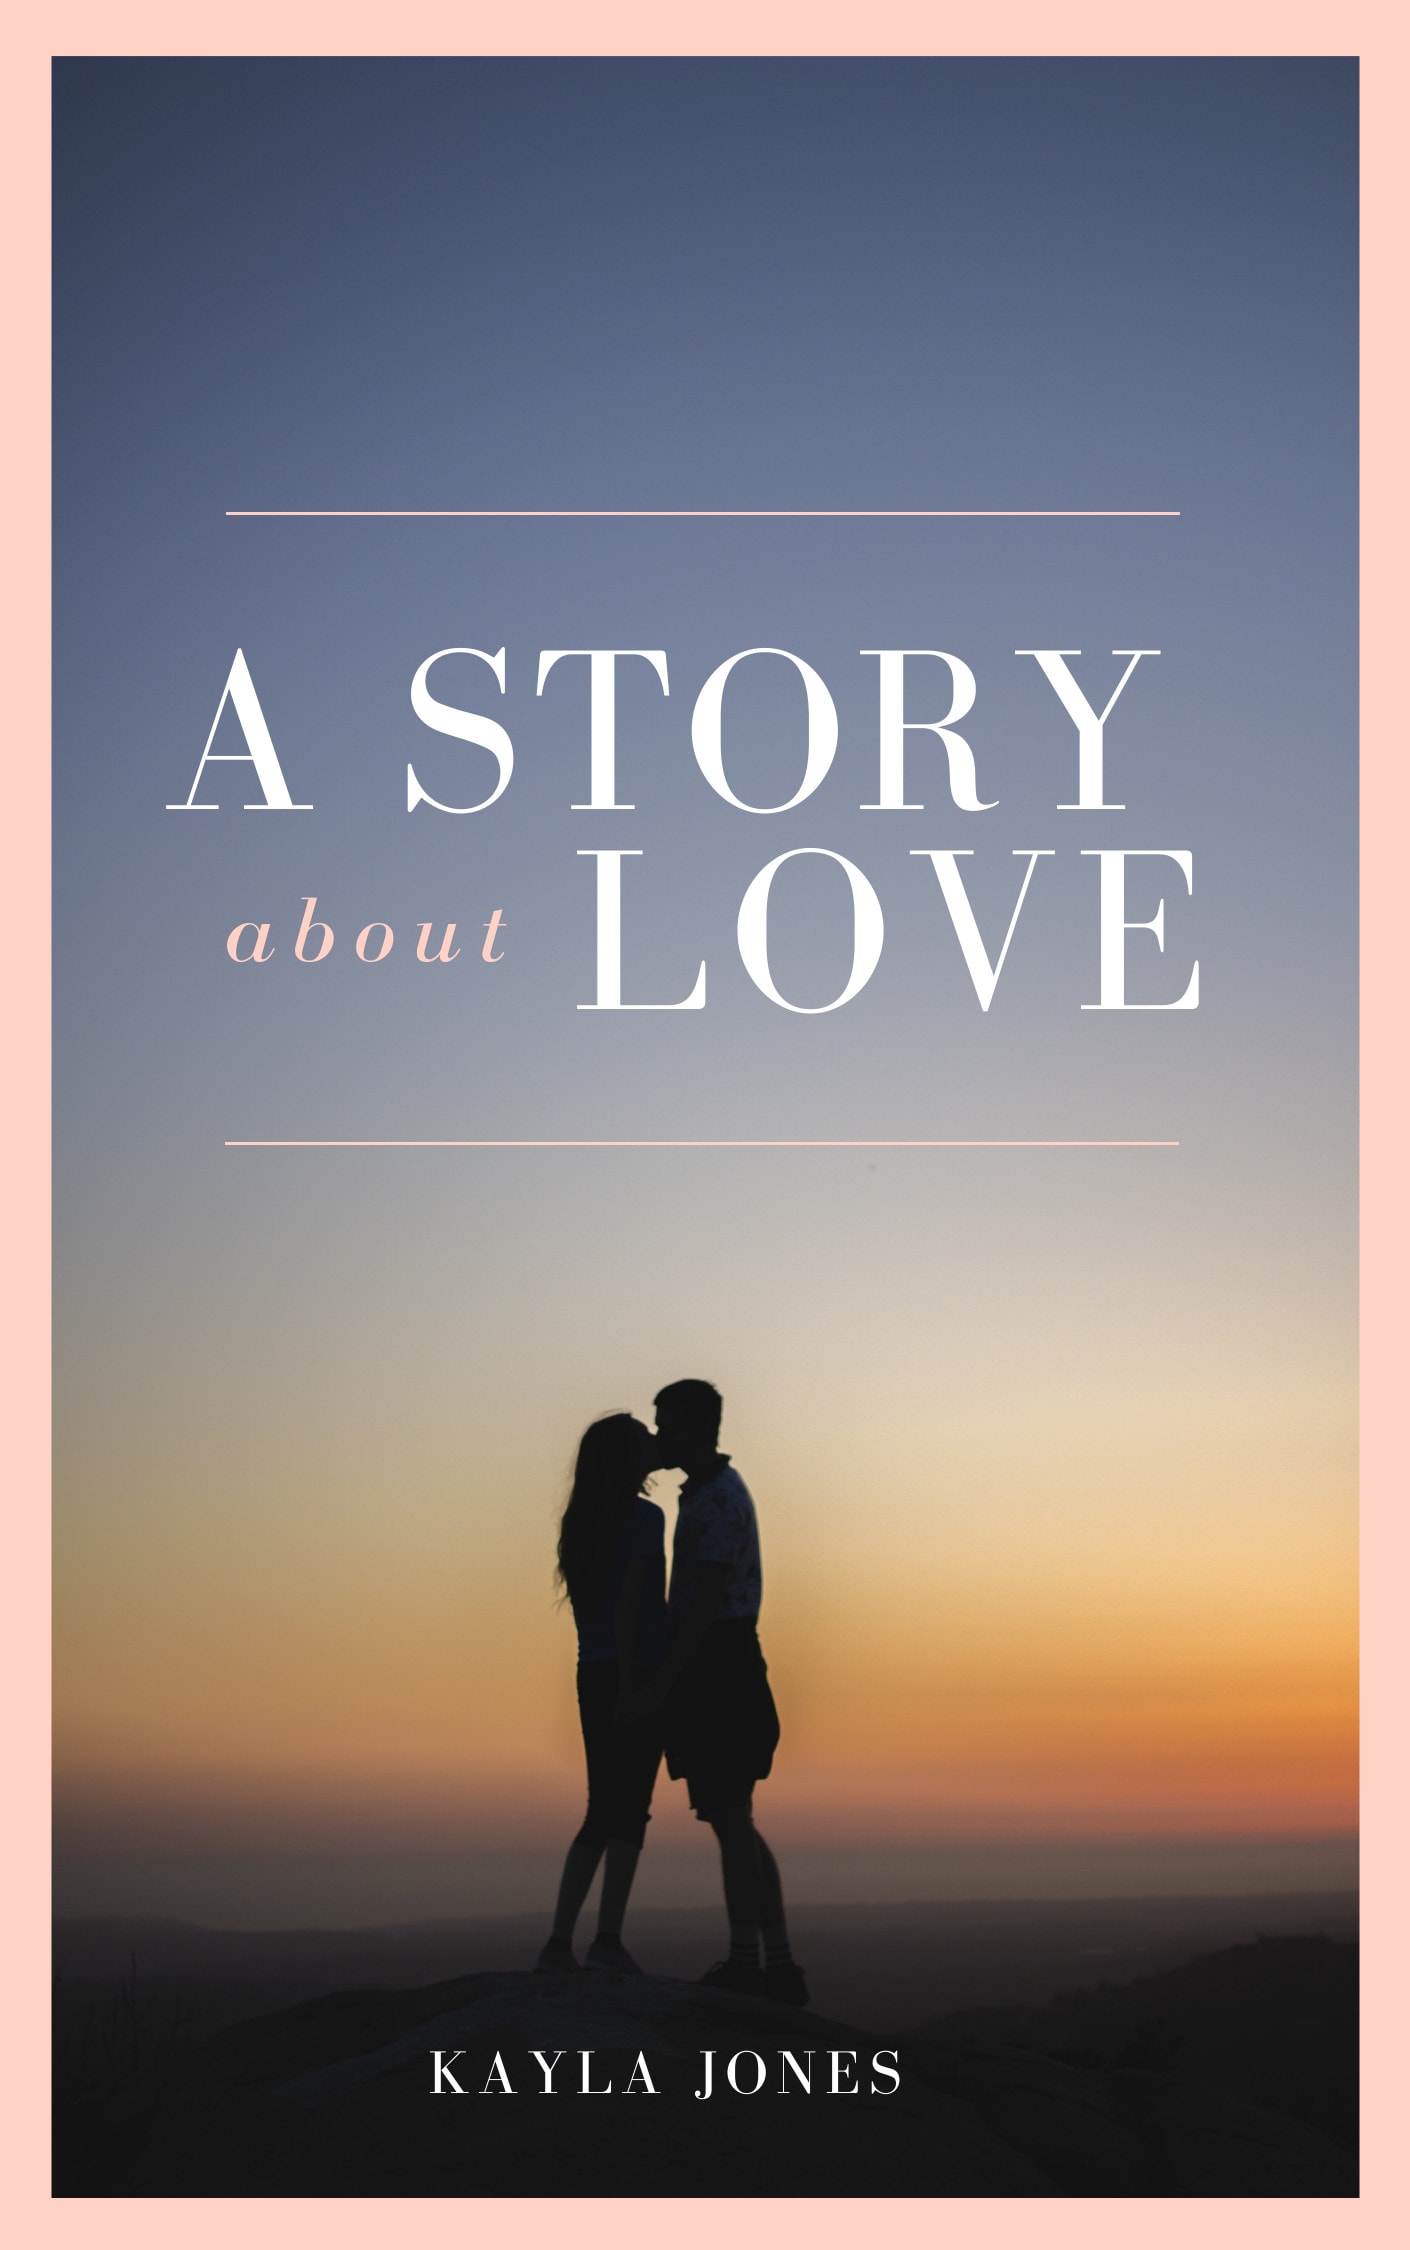 ghostwrite your romance short story, novella or novel